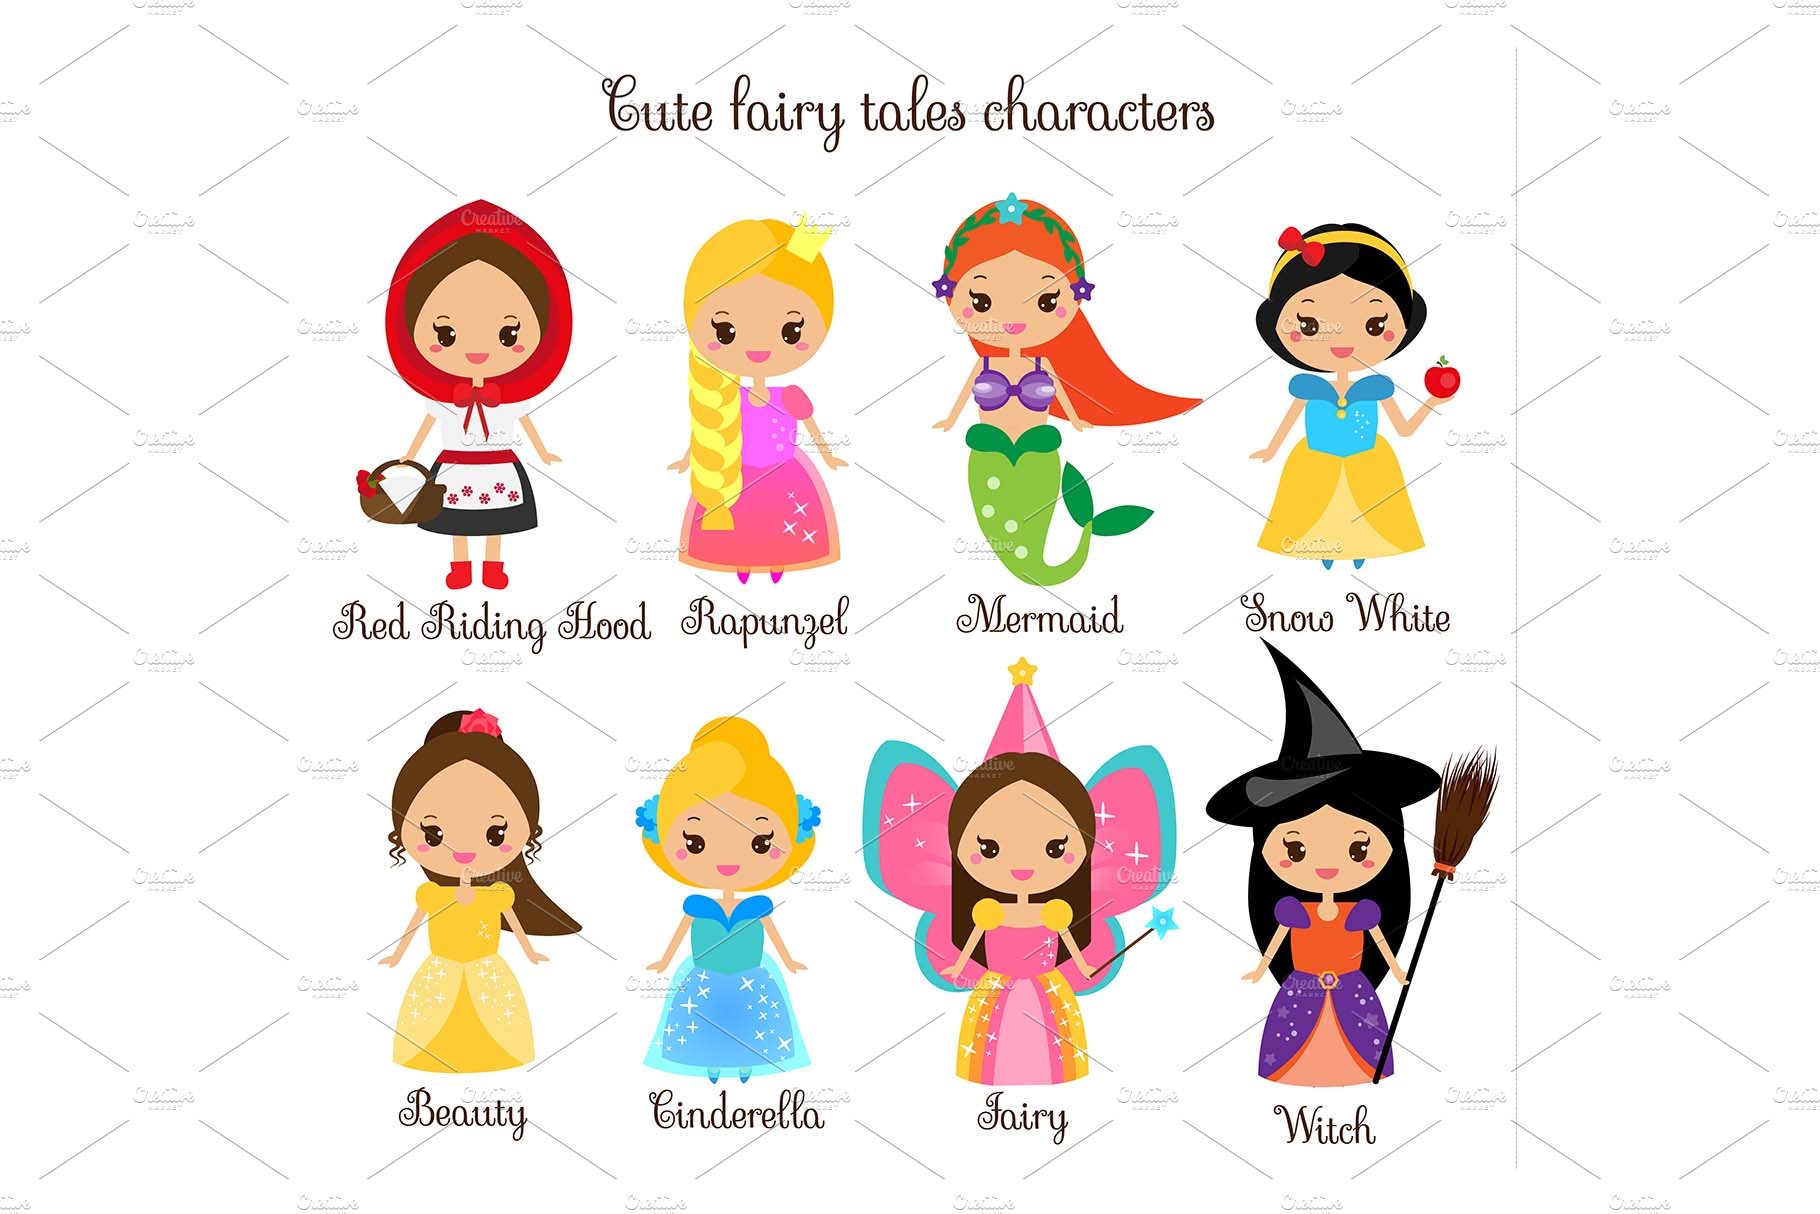 Cute kawaii fairy tale characters cover image.